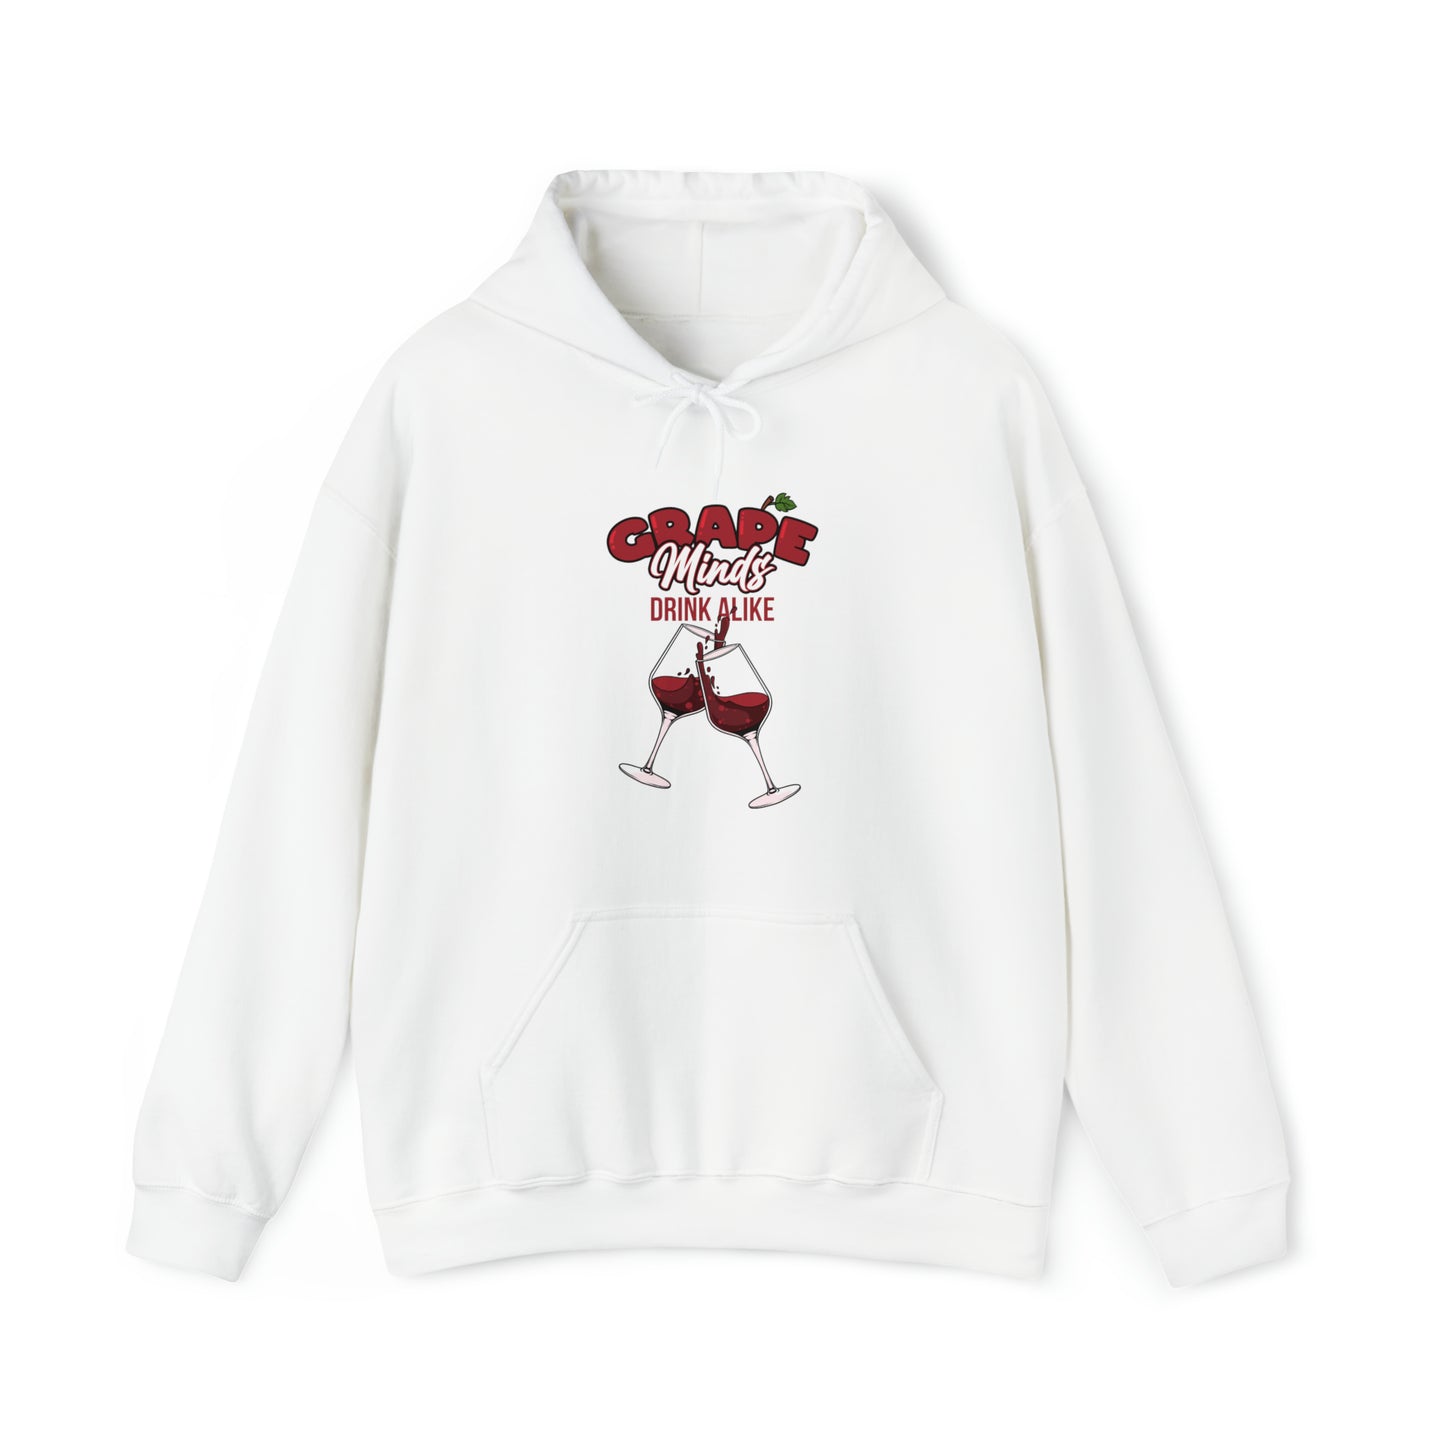 Custom Parody Hooded Sweatshirt, Grape minds think alike design